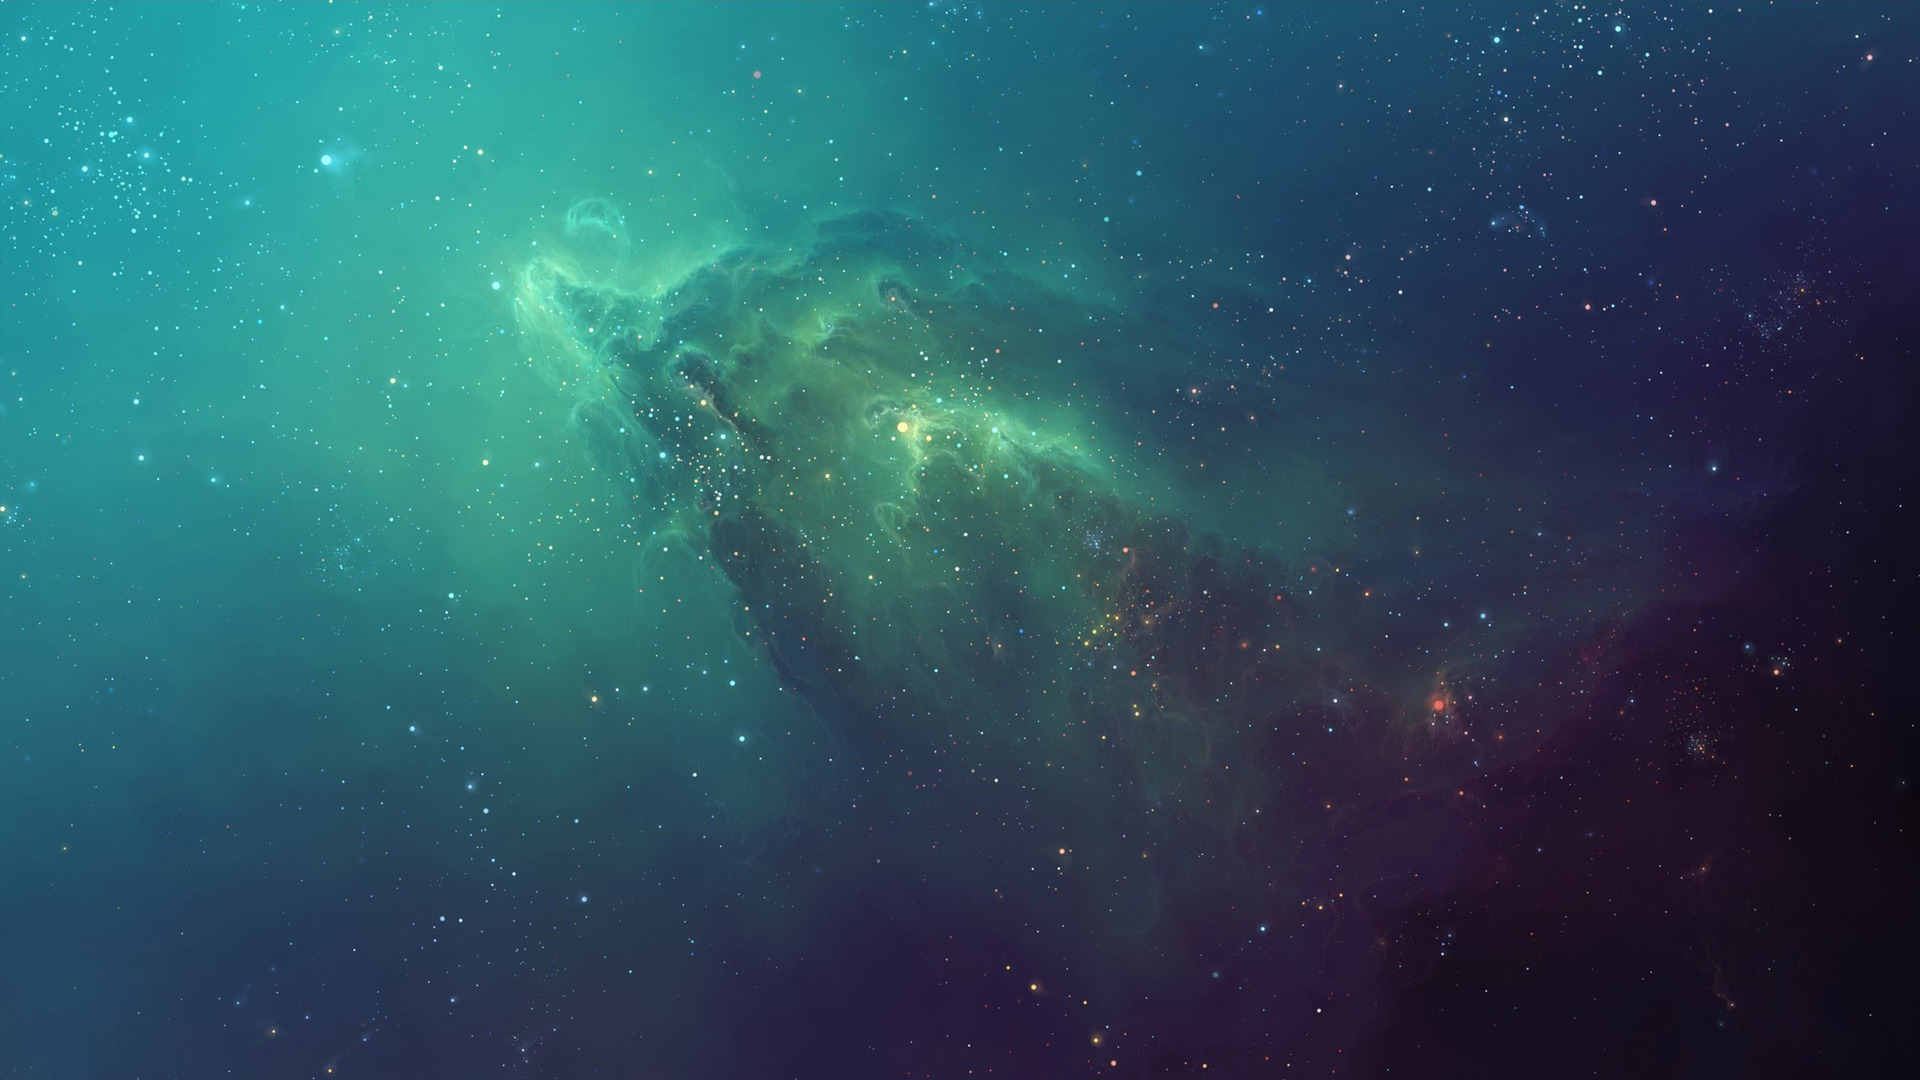 Gallery For gt Green Nebula Wallpaper Hd